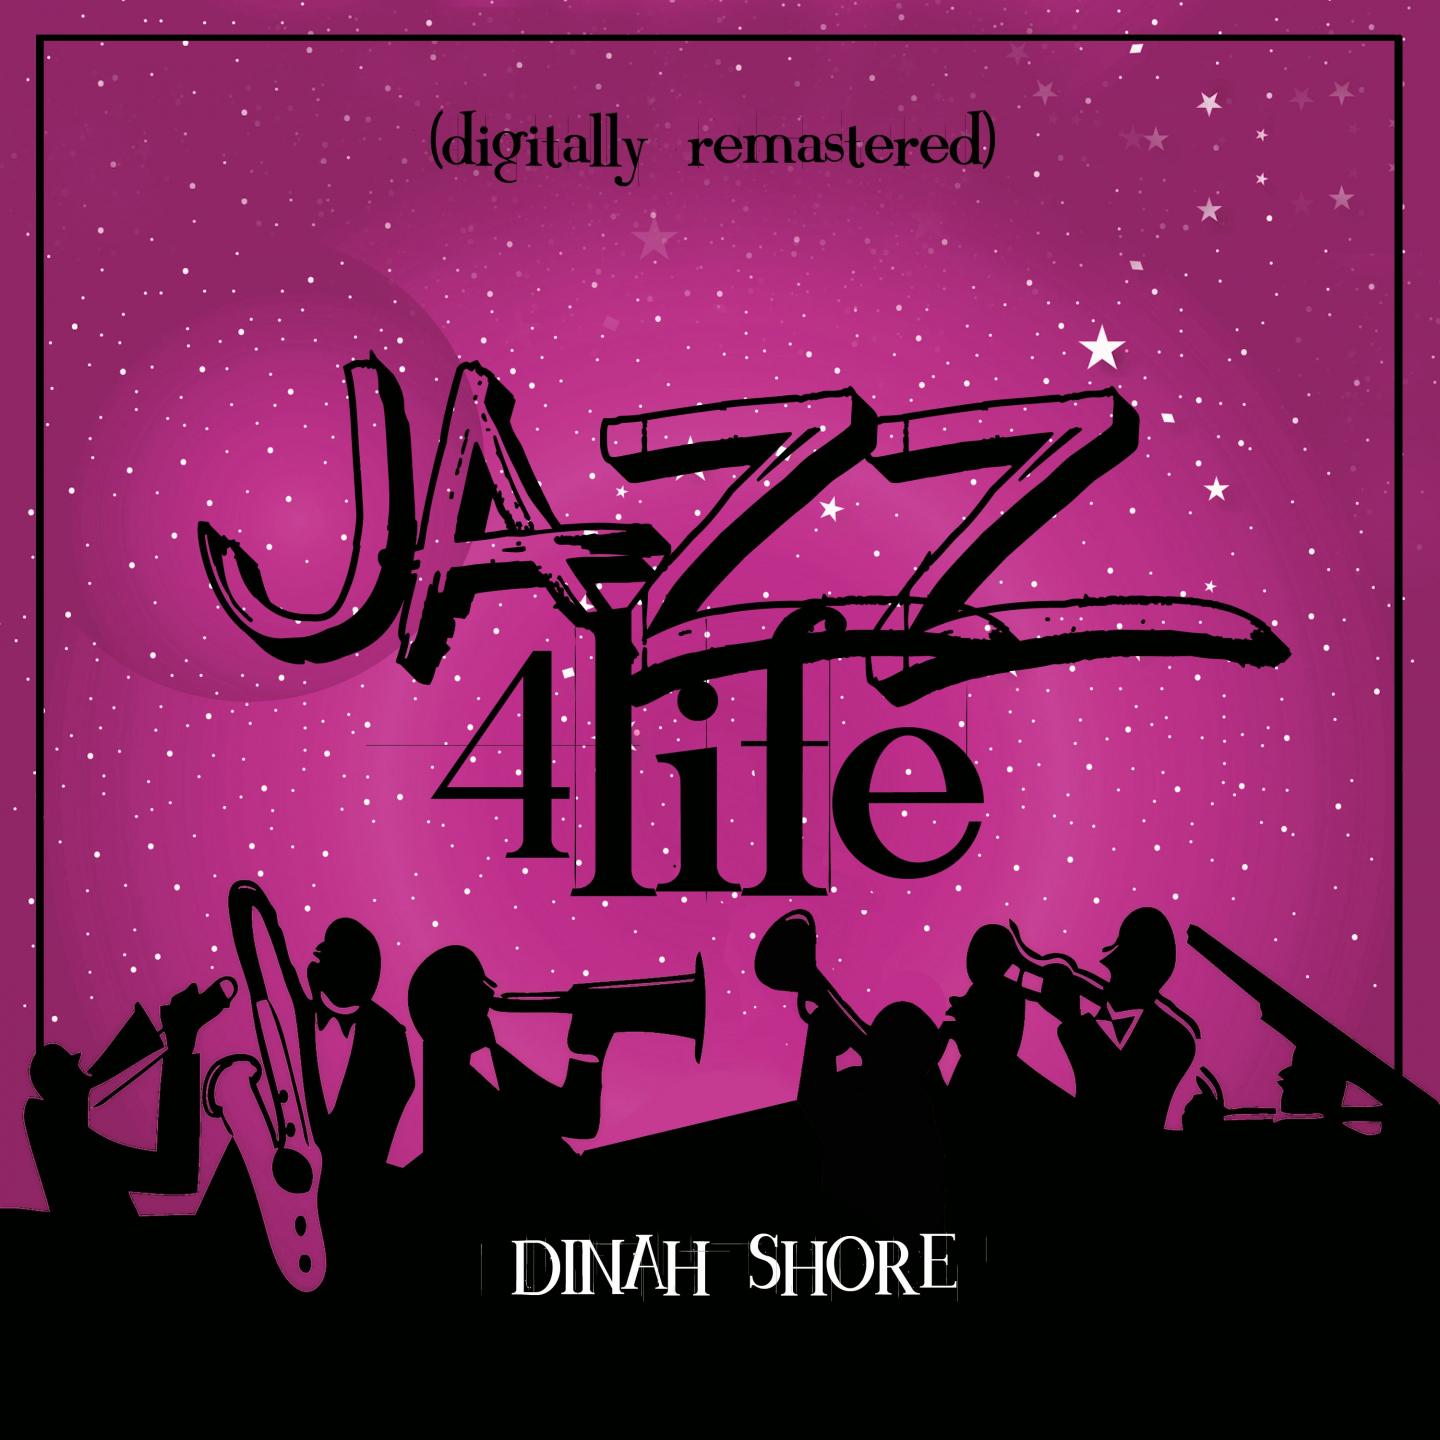 Jazz 4 Life (Digitally Remastered)